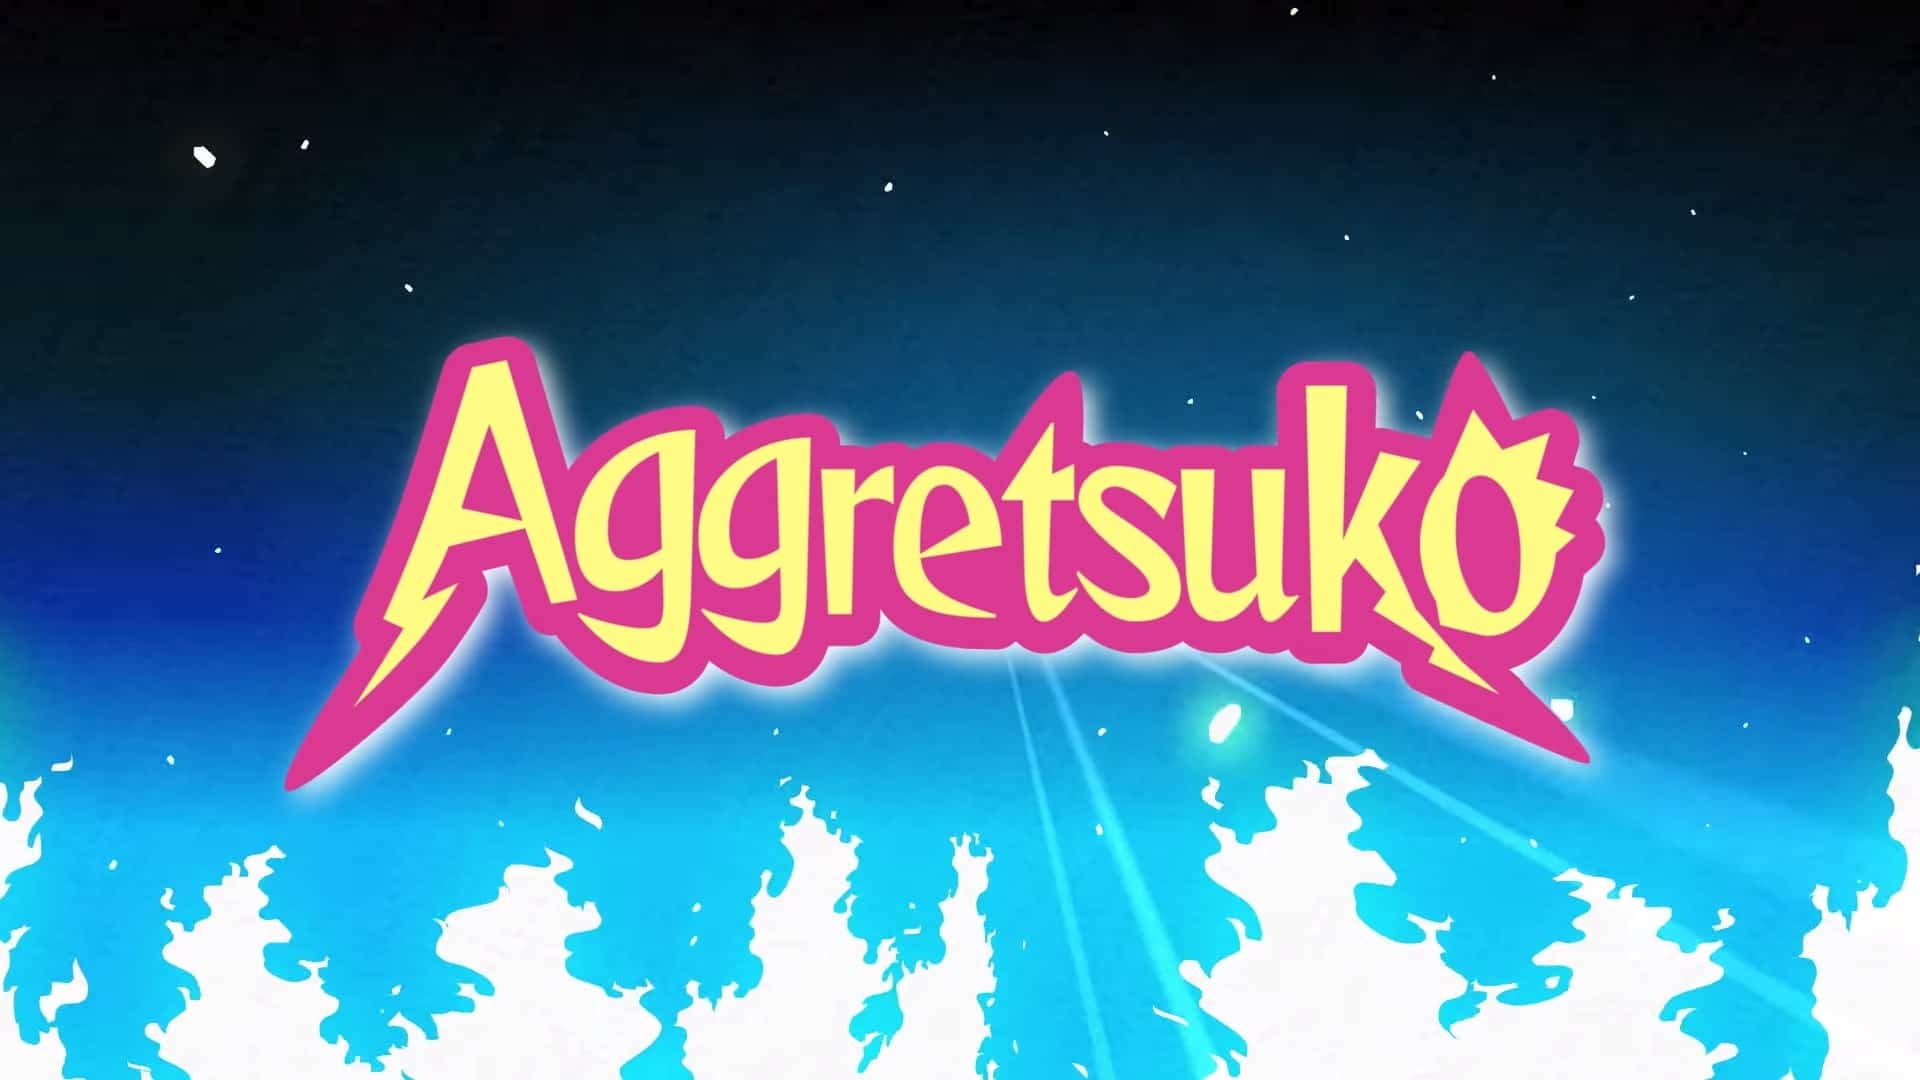 Netflix Aggretsuko Season 3 Trailer, Netflix Anime Series, Netflix Animated Comedy Series, Coming to Netflix in August 2020